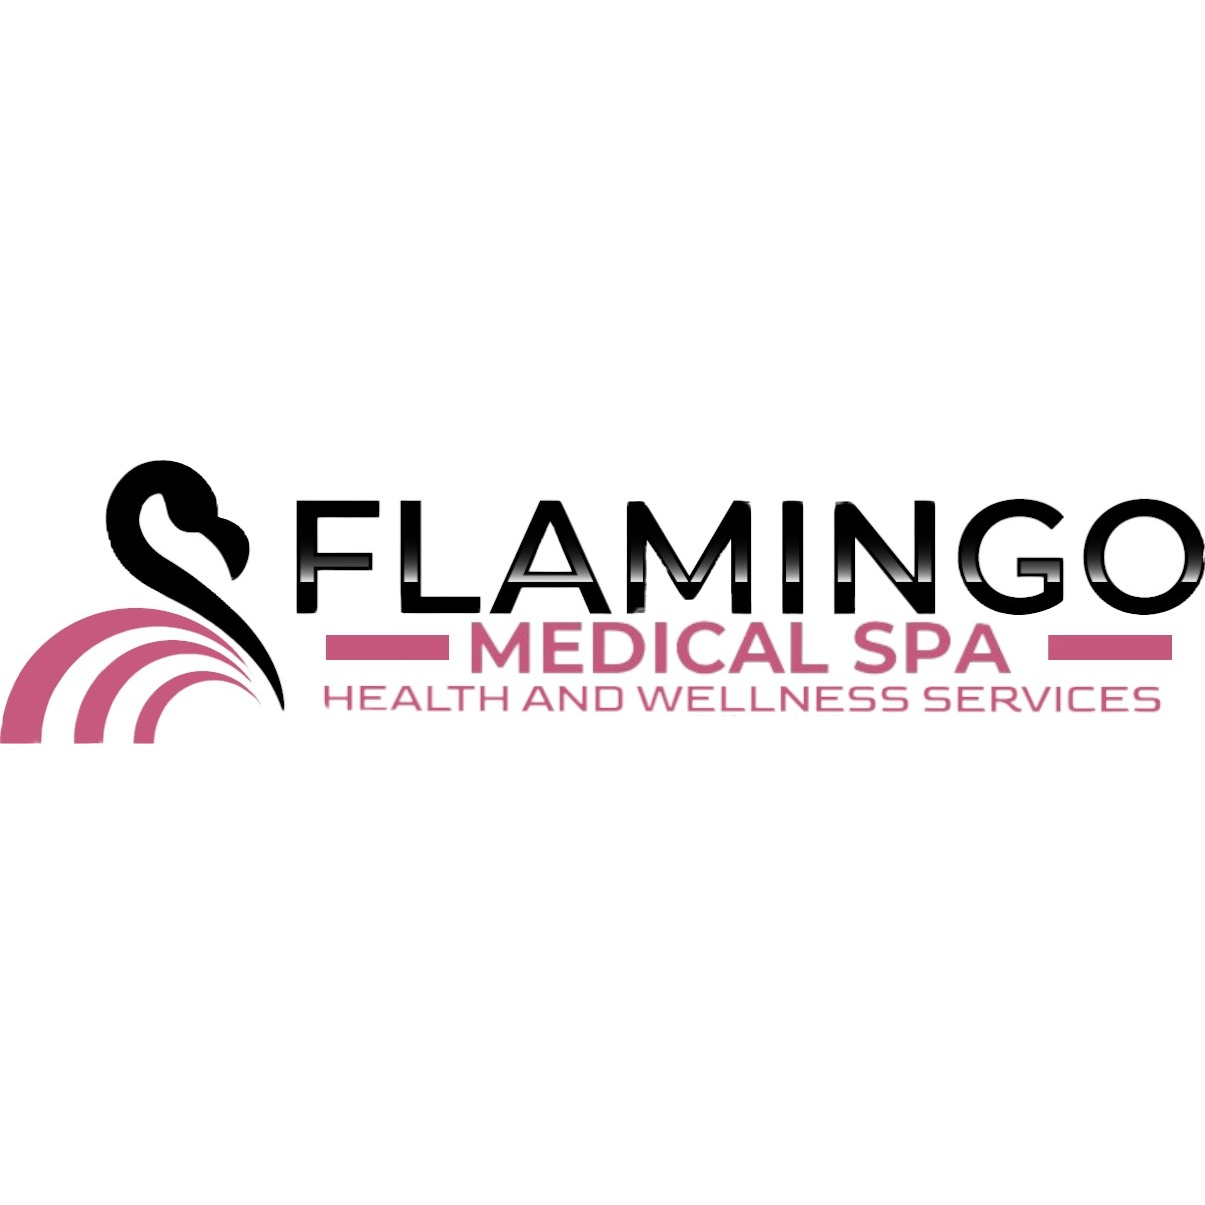 Flamingo Medical Spa - Warner Robins, GA 31093 - (478)333-8353 | ShowMeLocal.com